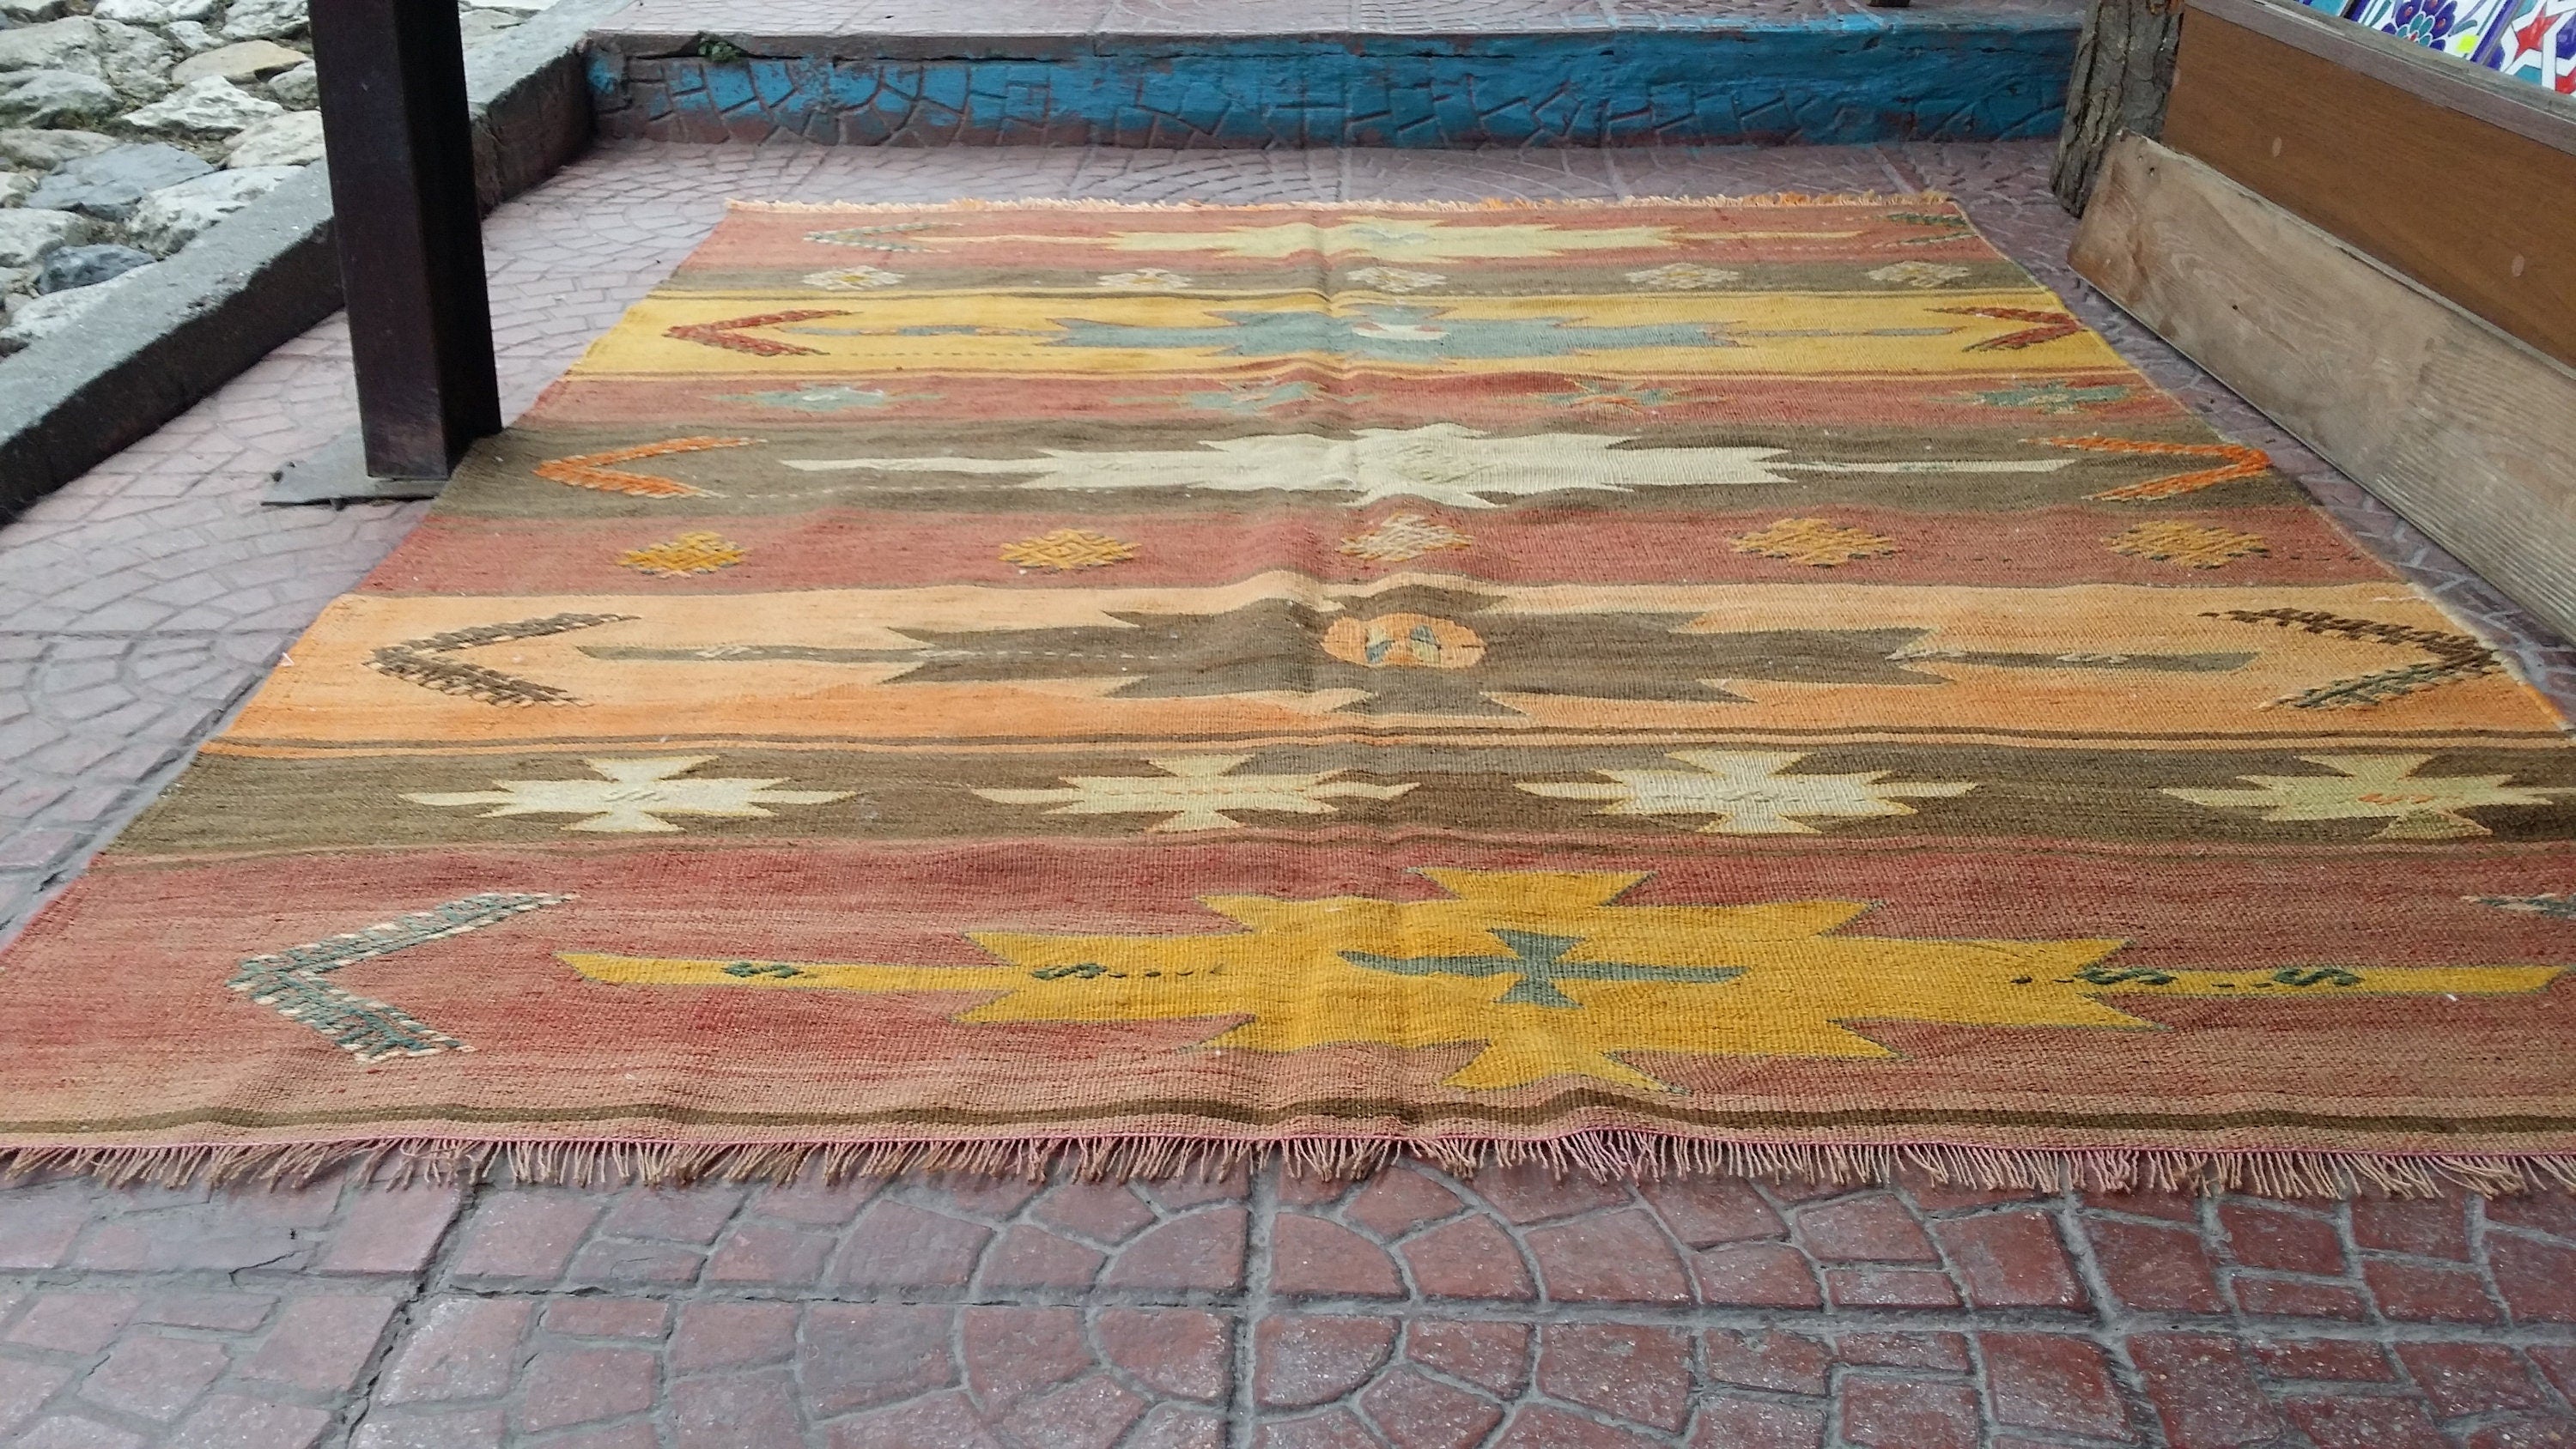 Turkish Kilim Rug 9 x 5 ft Orange Brown Vintage Southwestern Decor Handmade Wool Kilim, Antique Boho Rustic Aztec Design Persian Floor Rug